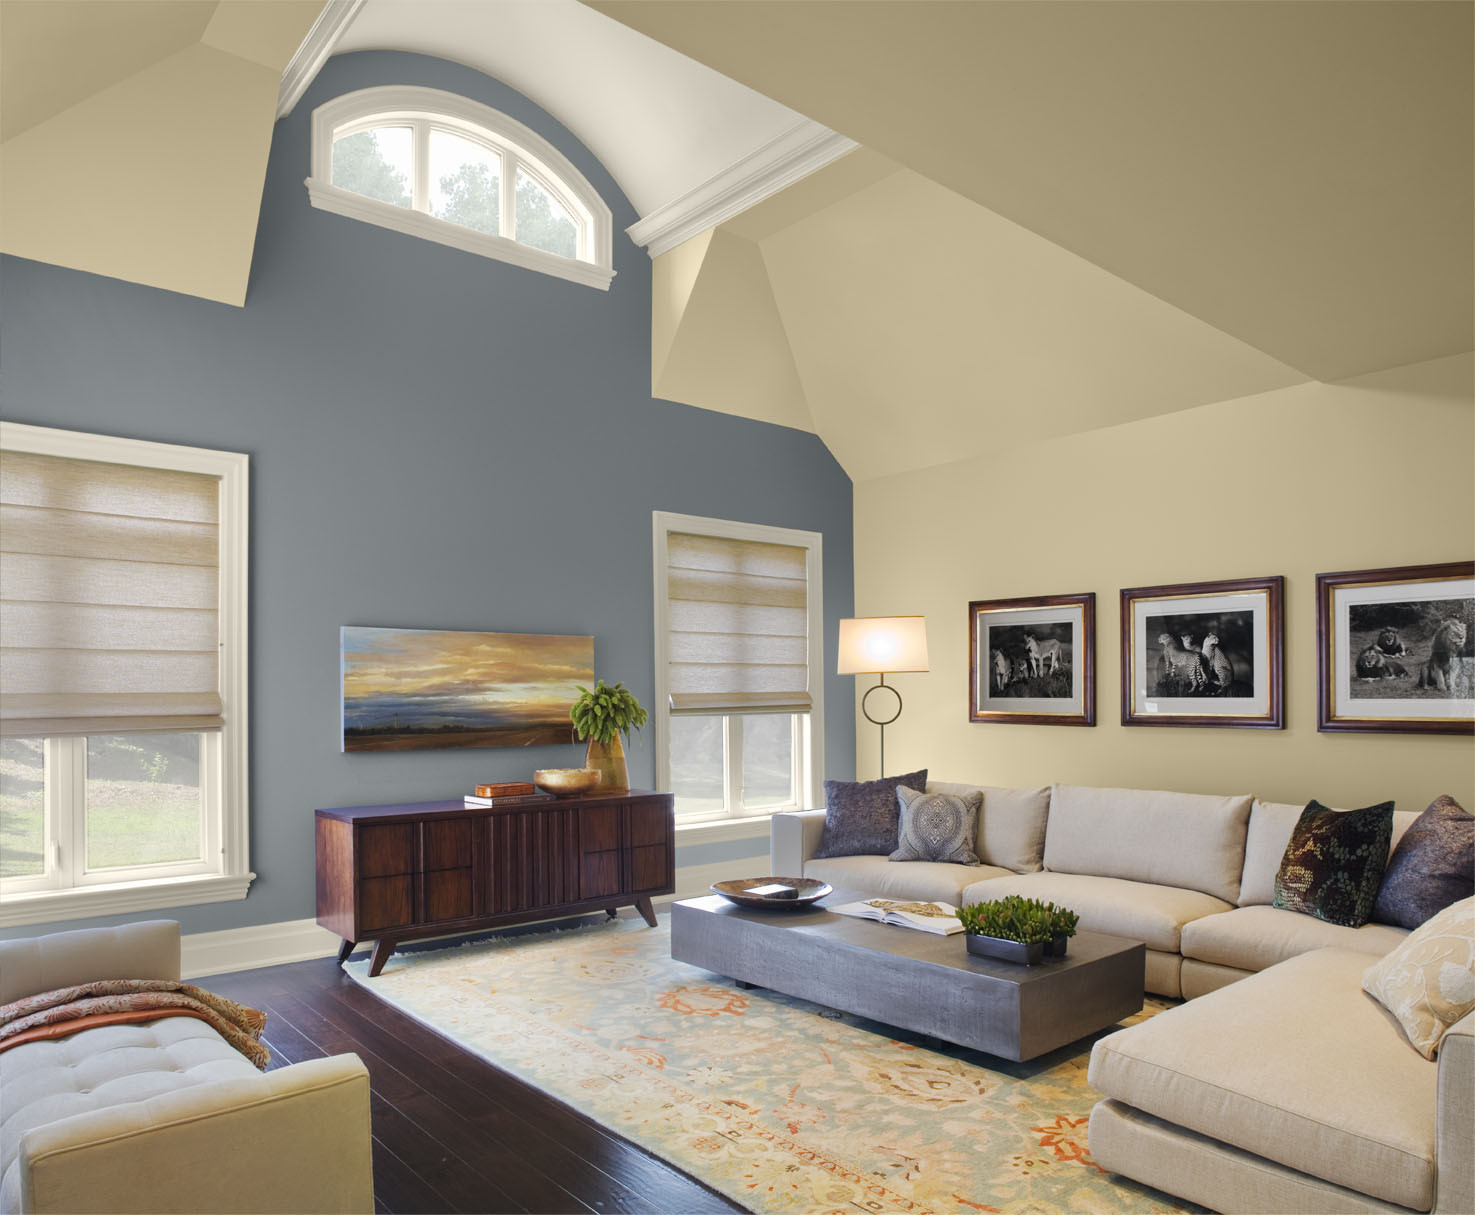 Paint Schemes for Living Room New 30 Excellent Living Room Paint Color Ideas Slodive